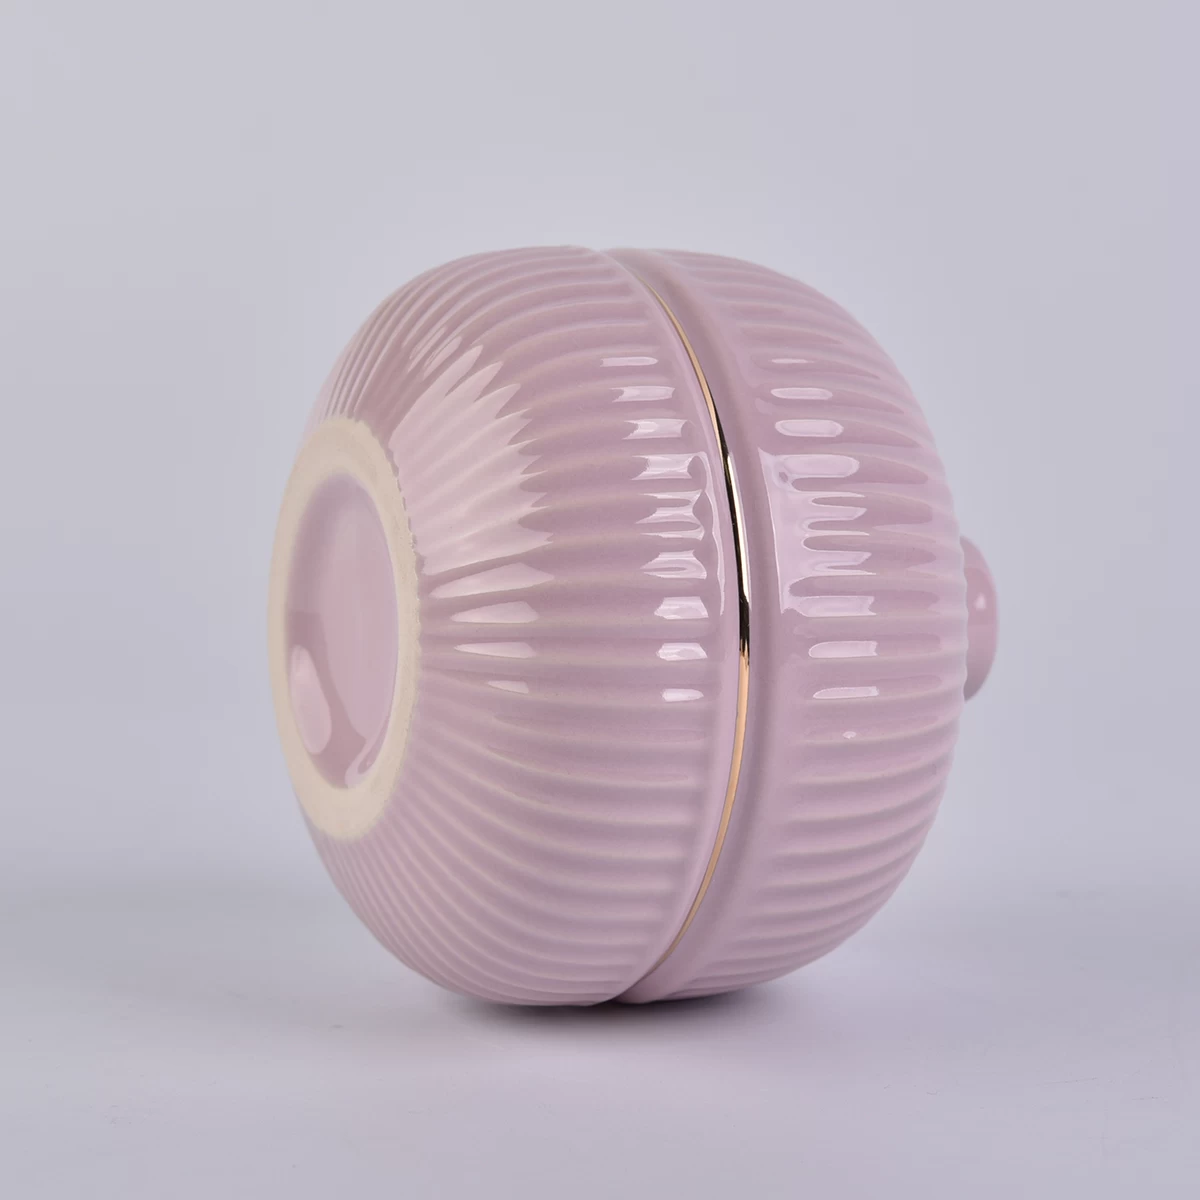 250ml ceramic diffuser bottles onion-shaped design